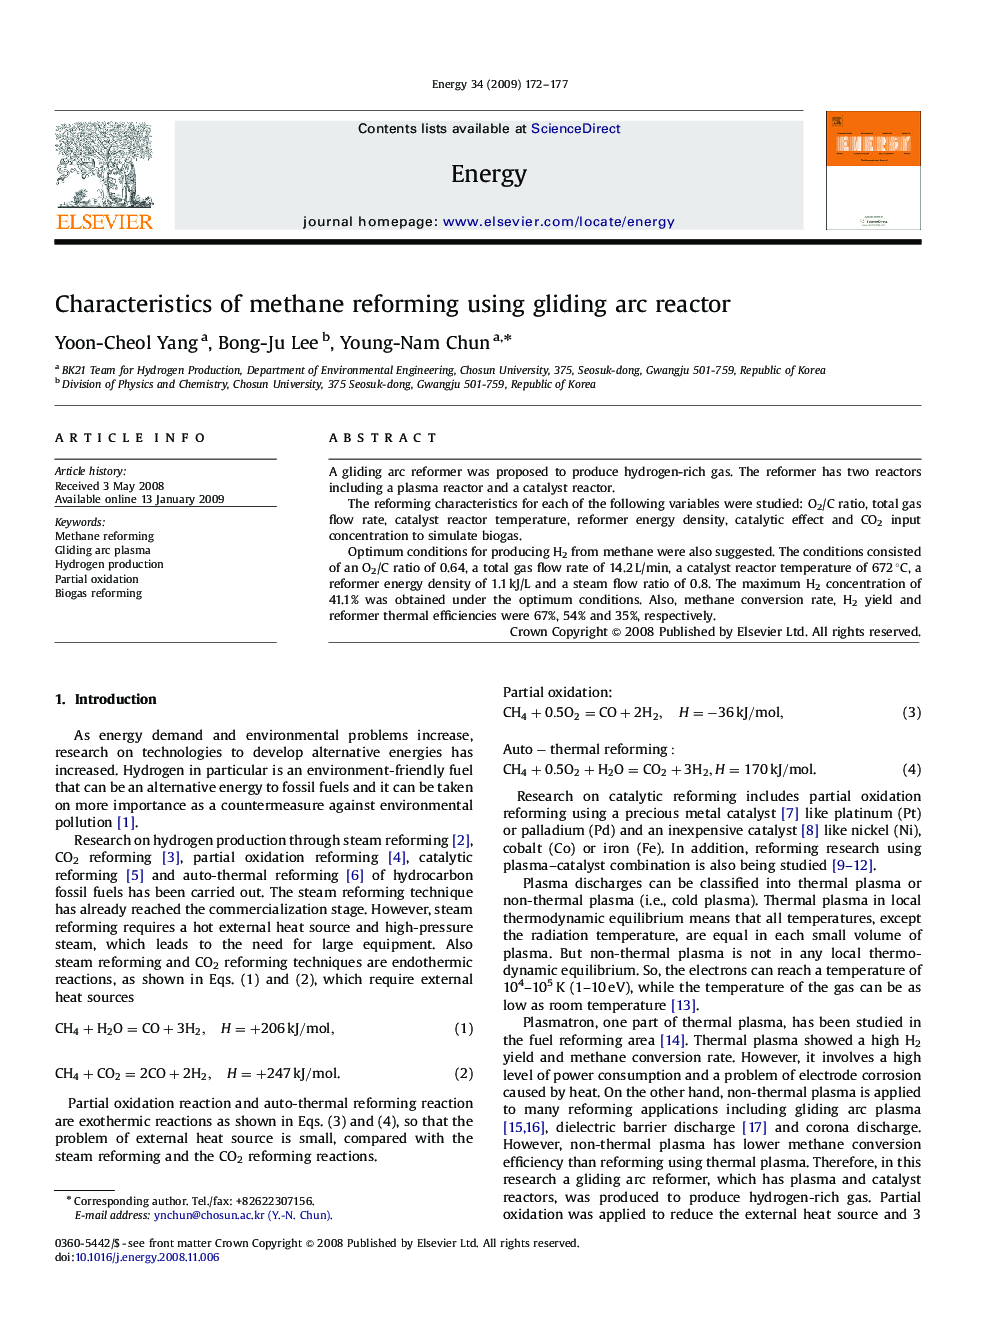 Characteristics of methane reforming using gliding arc reactor